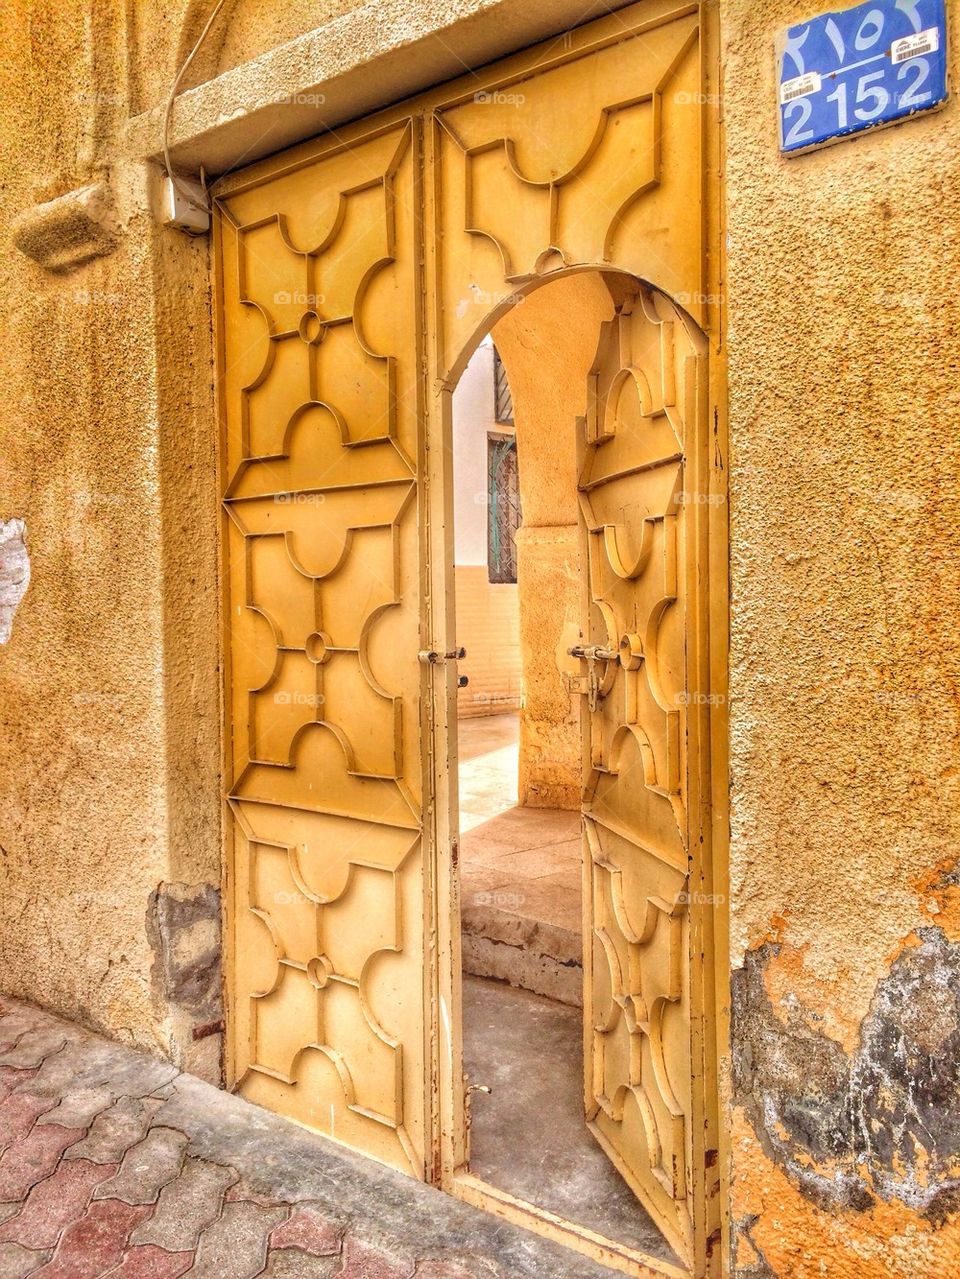 other great outdoors door muţraḩ mutrah corniche الطريق البحري by cindysaz1